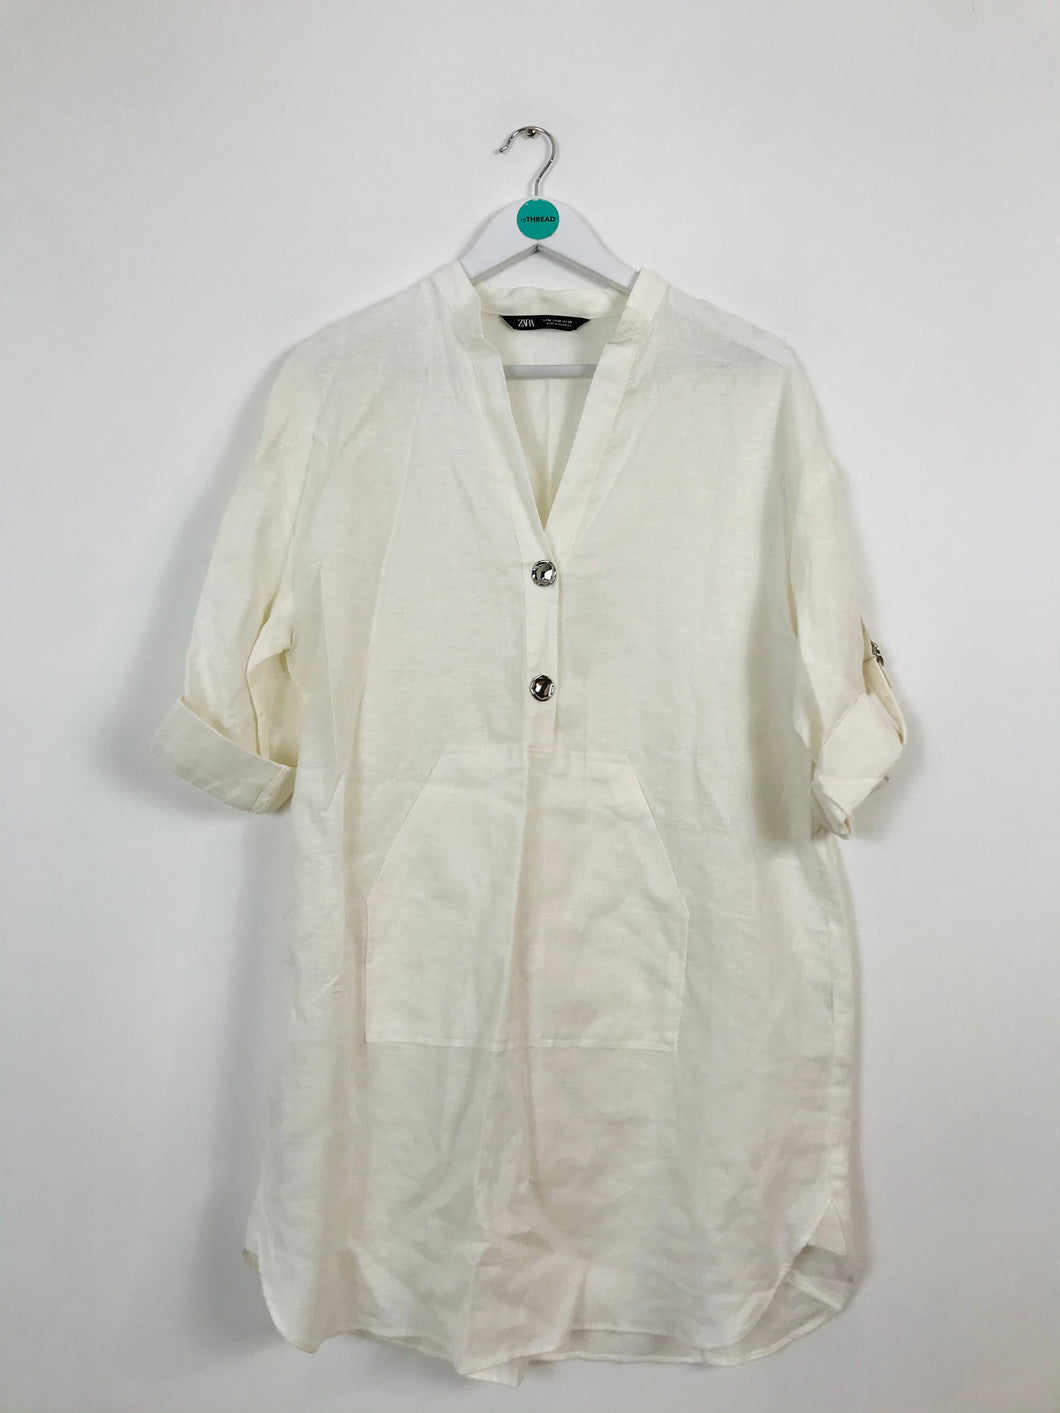 Zara Women’s Oversized Linen Shirt Dress | M | Cream White